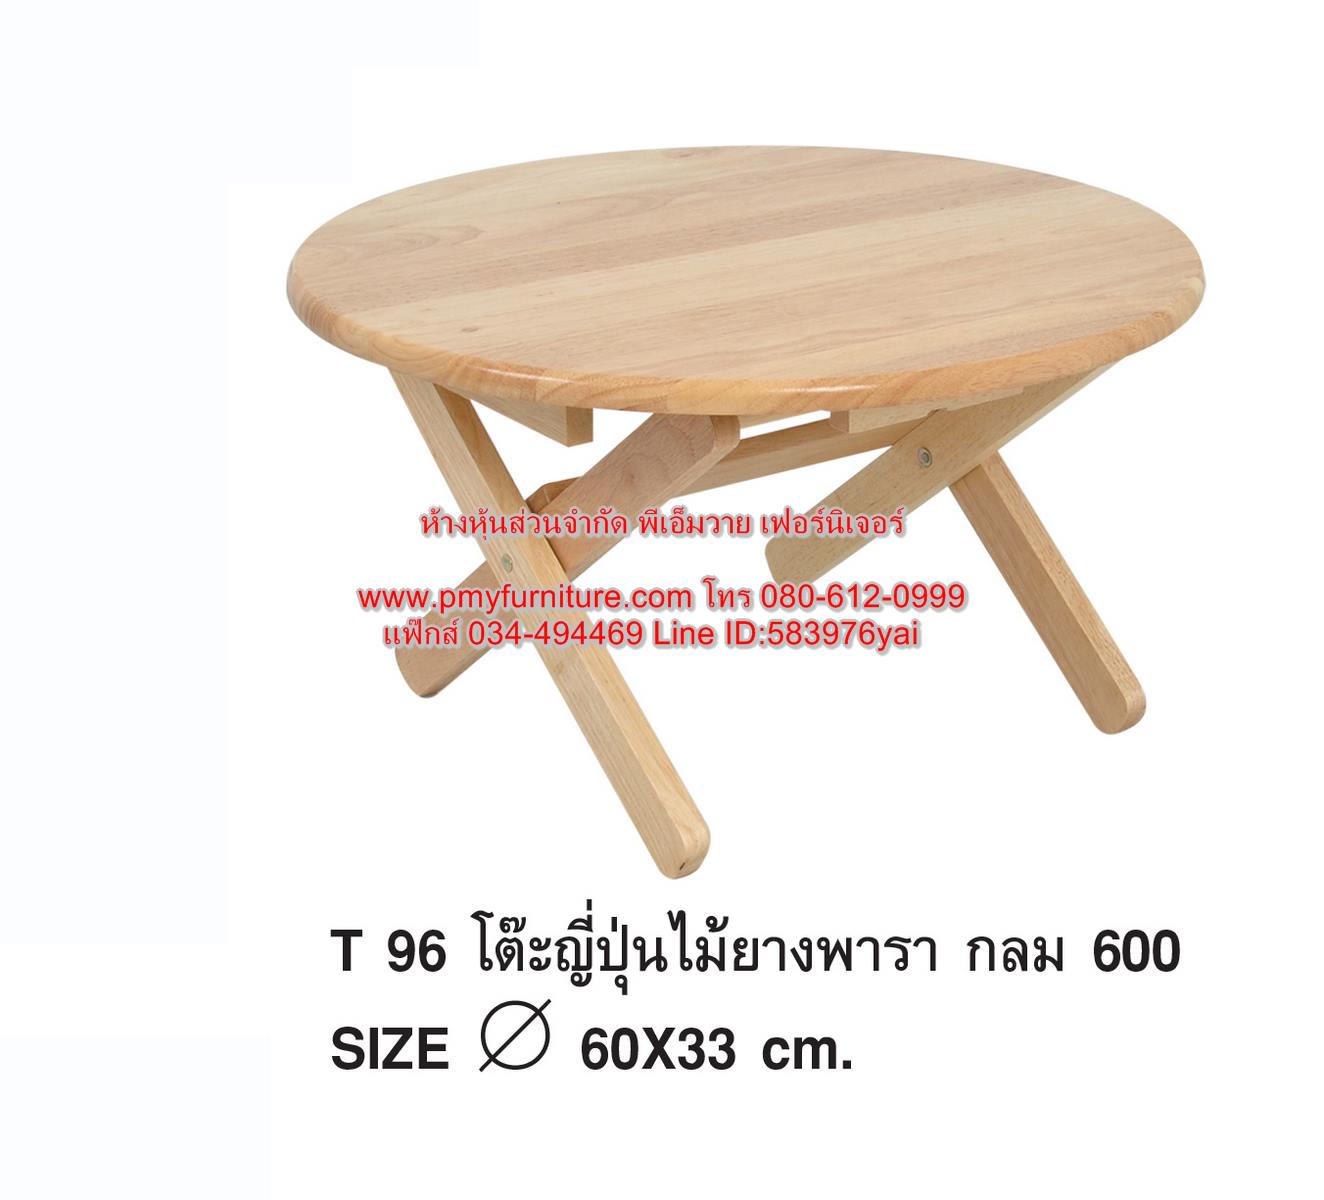 PMY24-2 โต๊ะญี่ปุ่นกลม ไม้ยางพารา ขนาด 60 ซม. 0